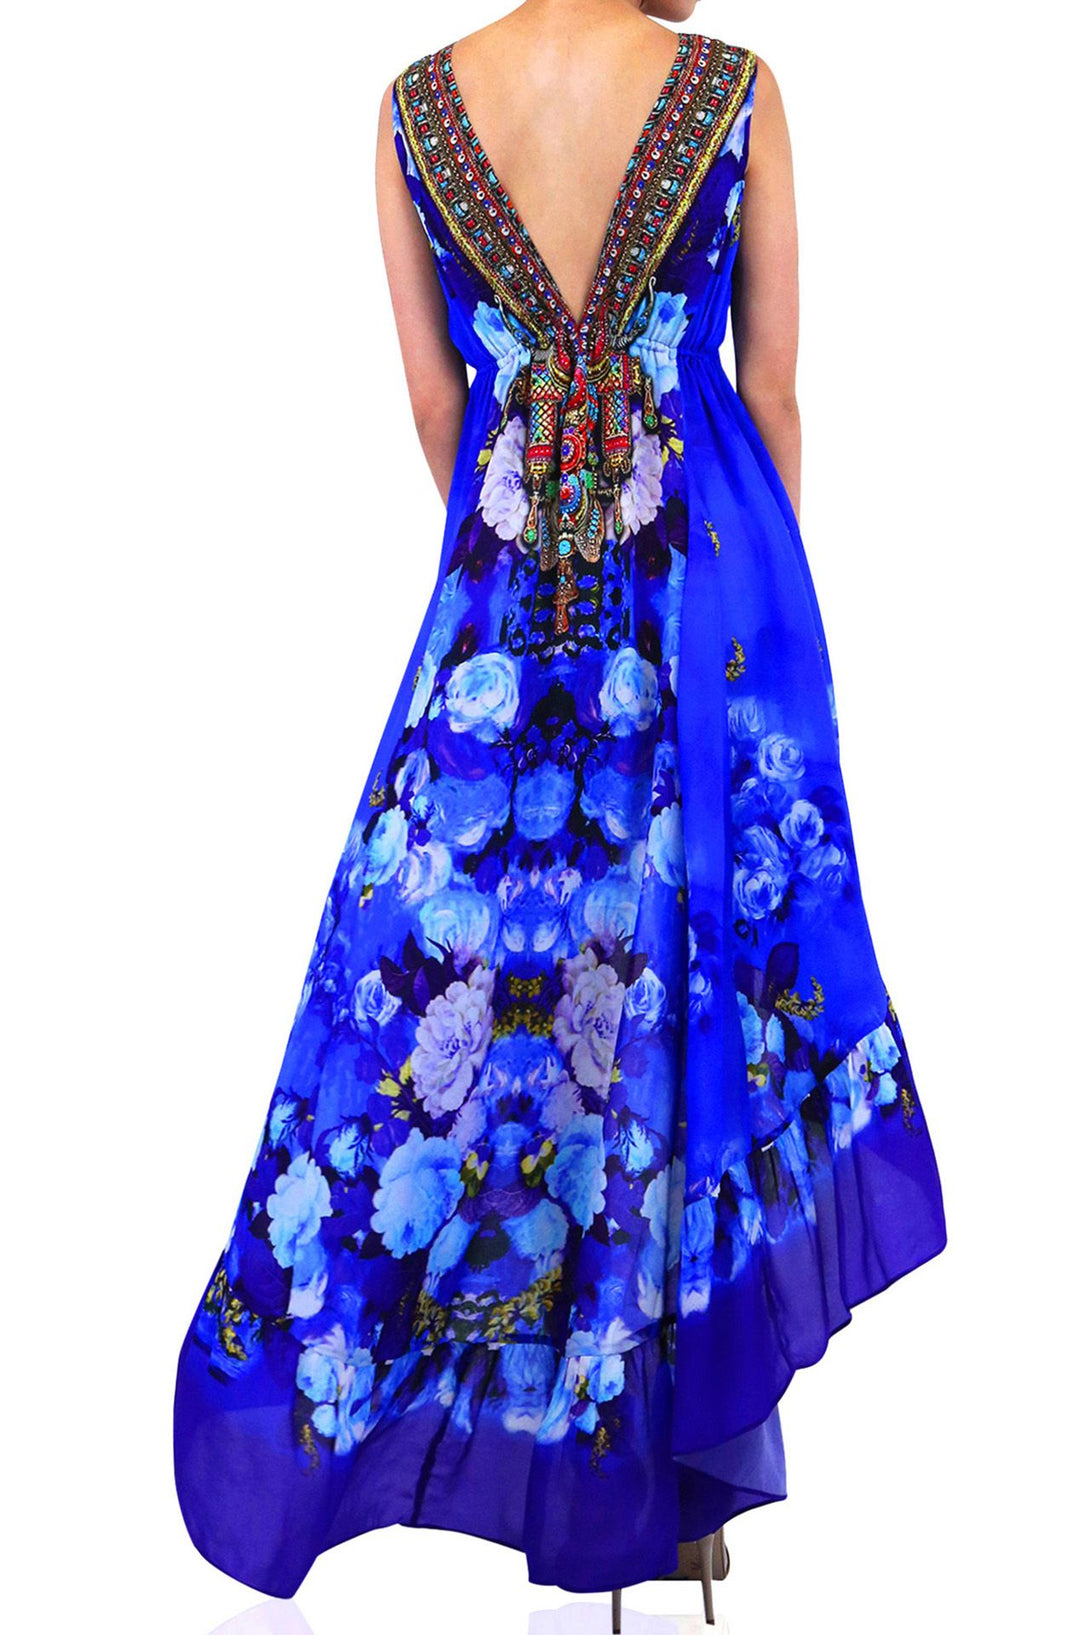  long blue dress formal, high and low cocktail dresses, plunging v neck formal dress, Shahida Parides,